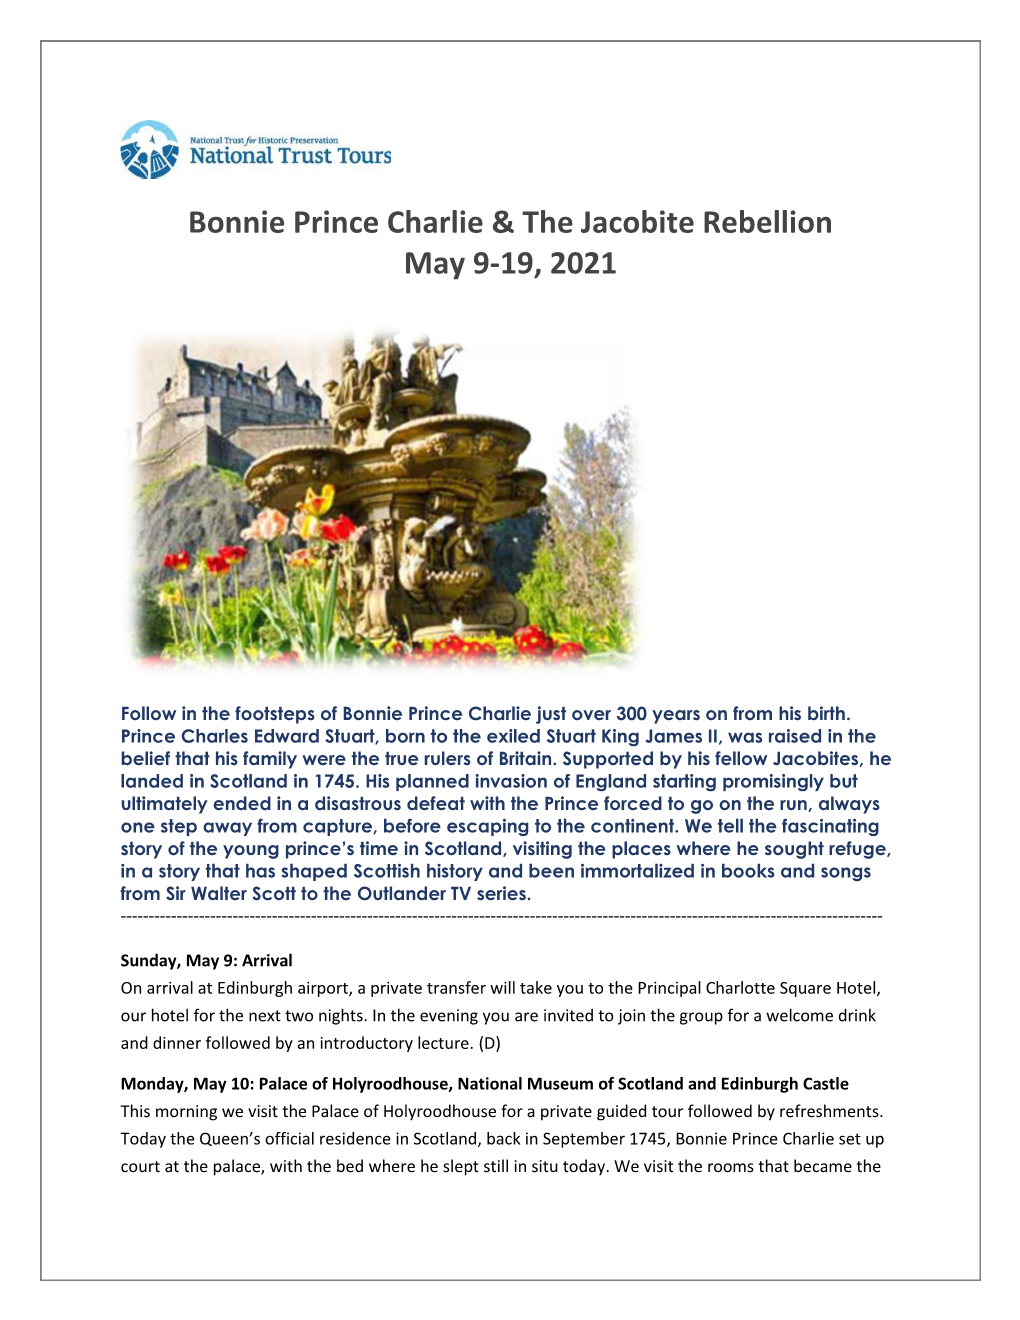 Bonnie Prince Charlie & the Jacobite Rebellion